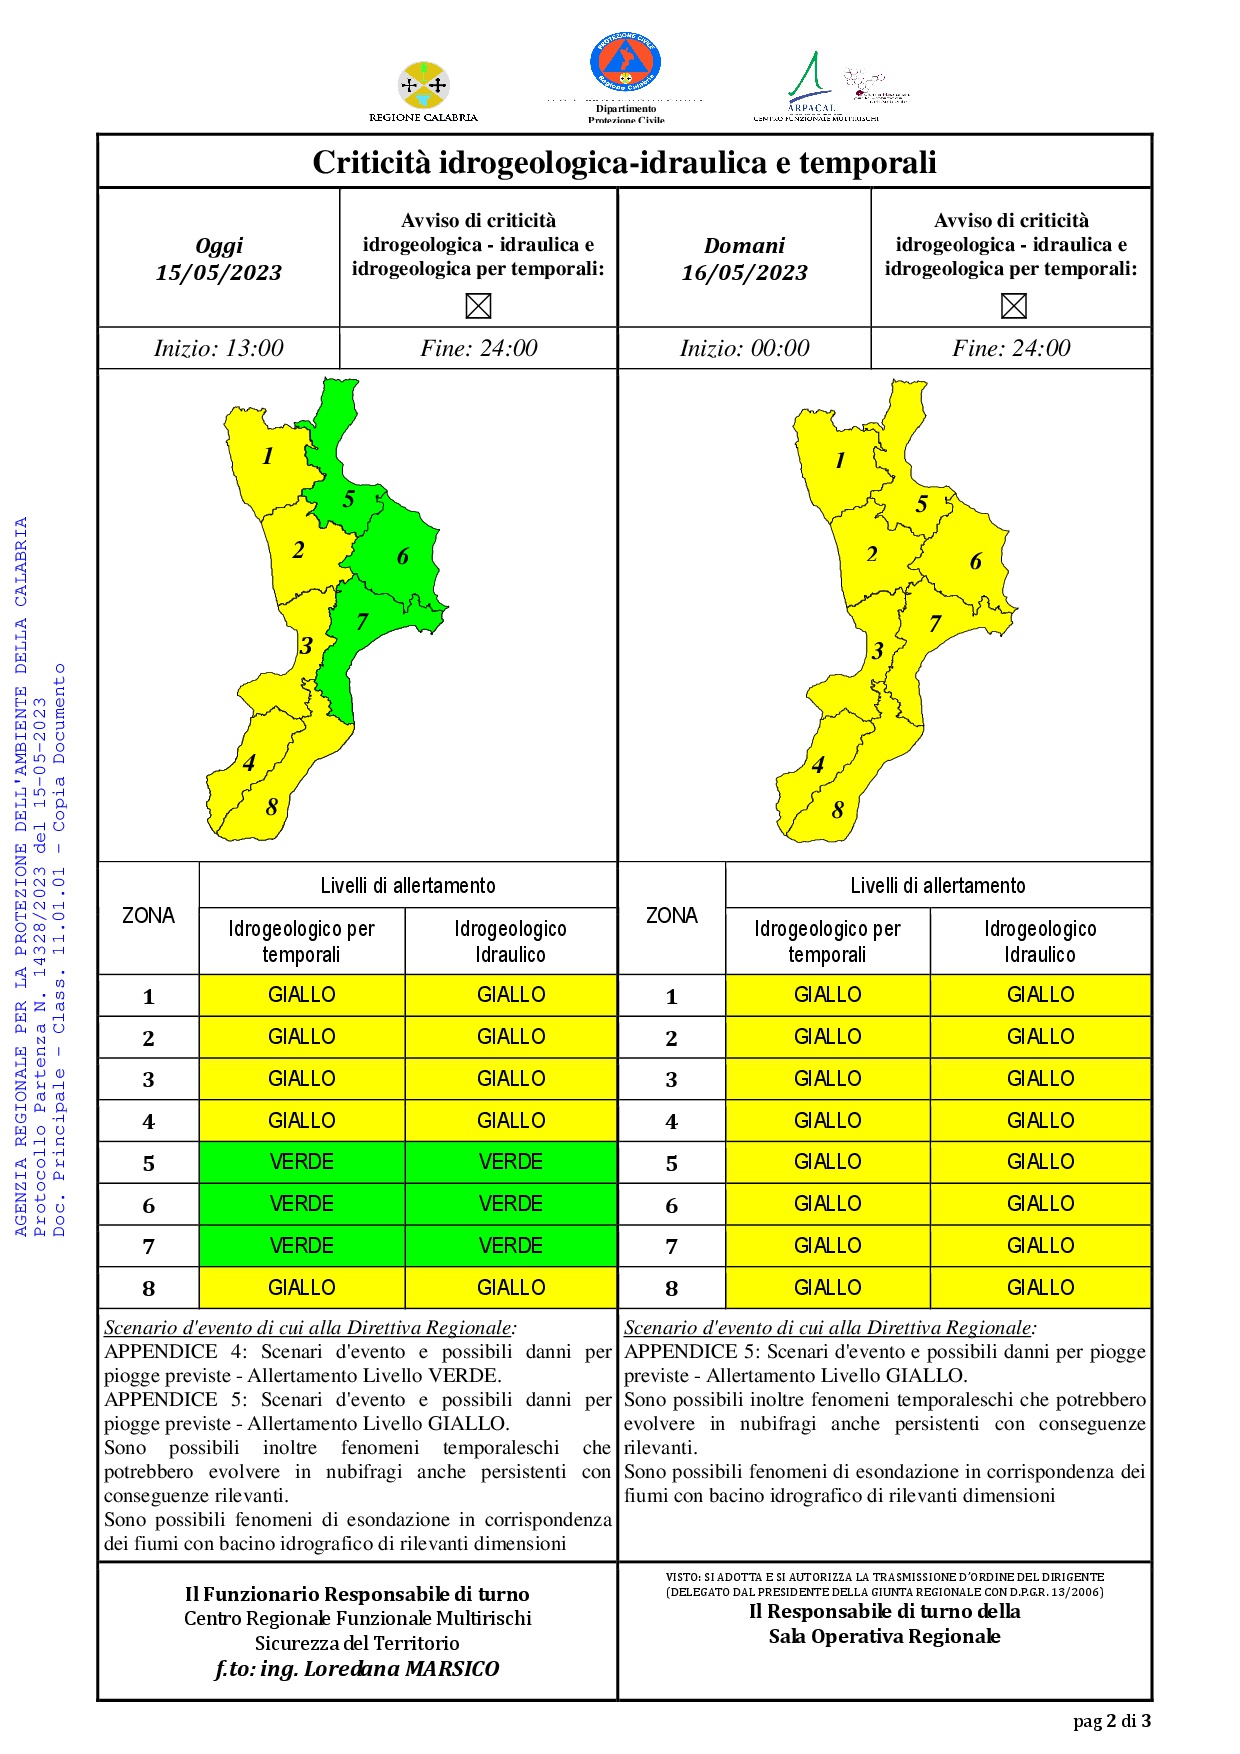 Criticità idrogeologica-idraulica e temporali in Calabria 15-05-2023